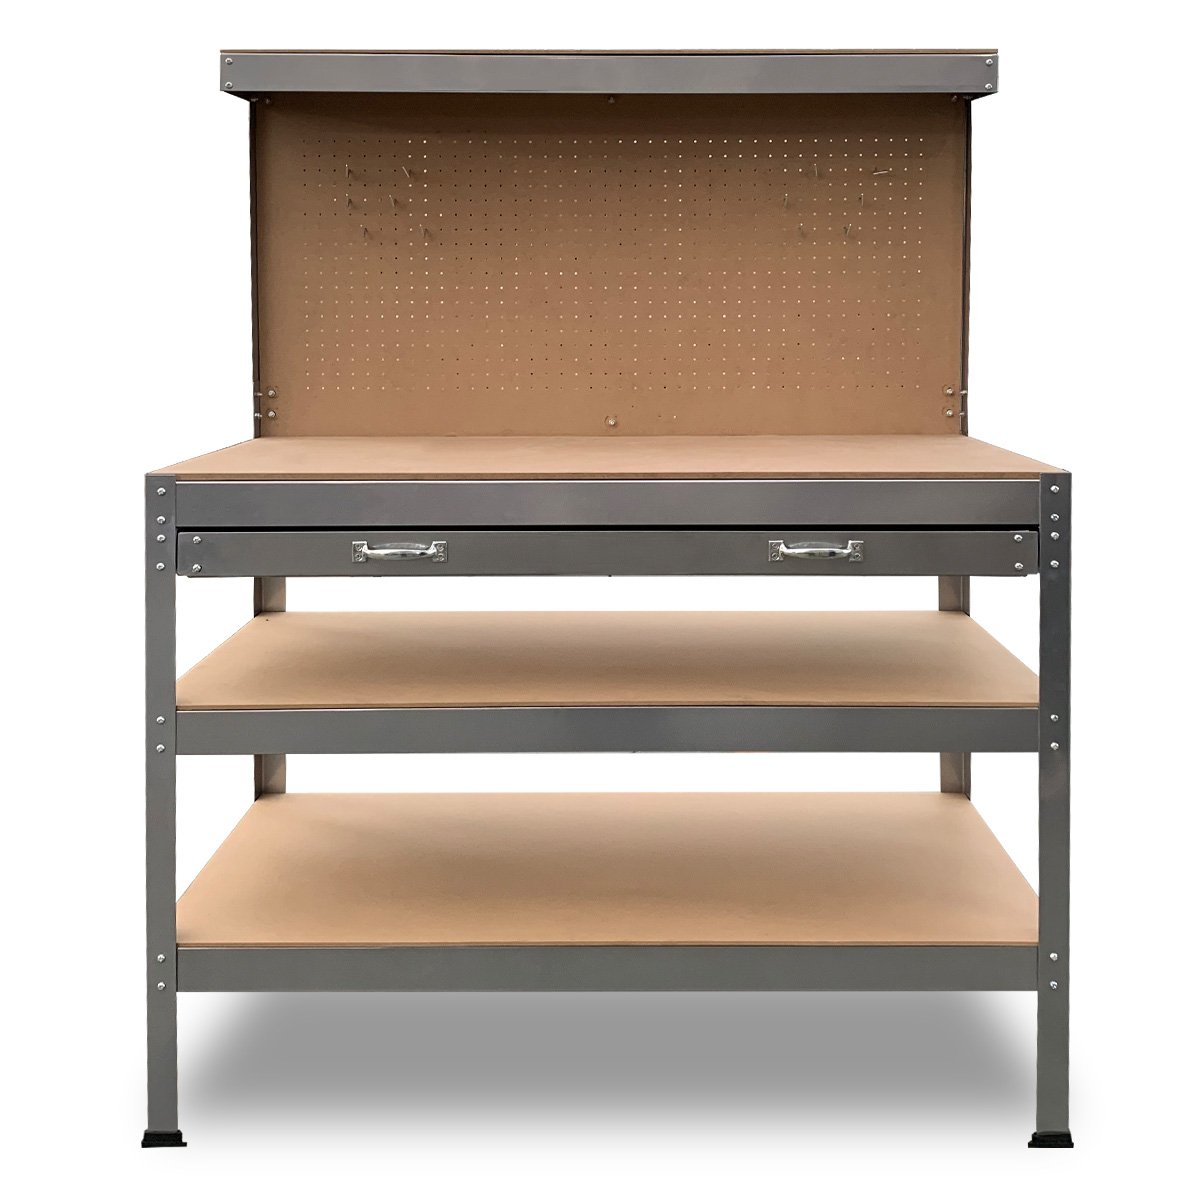 3-Layered Work Bench Garage Storage Table Tool Shop Shelf Silver 1